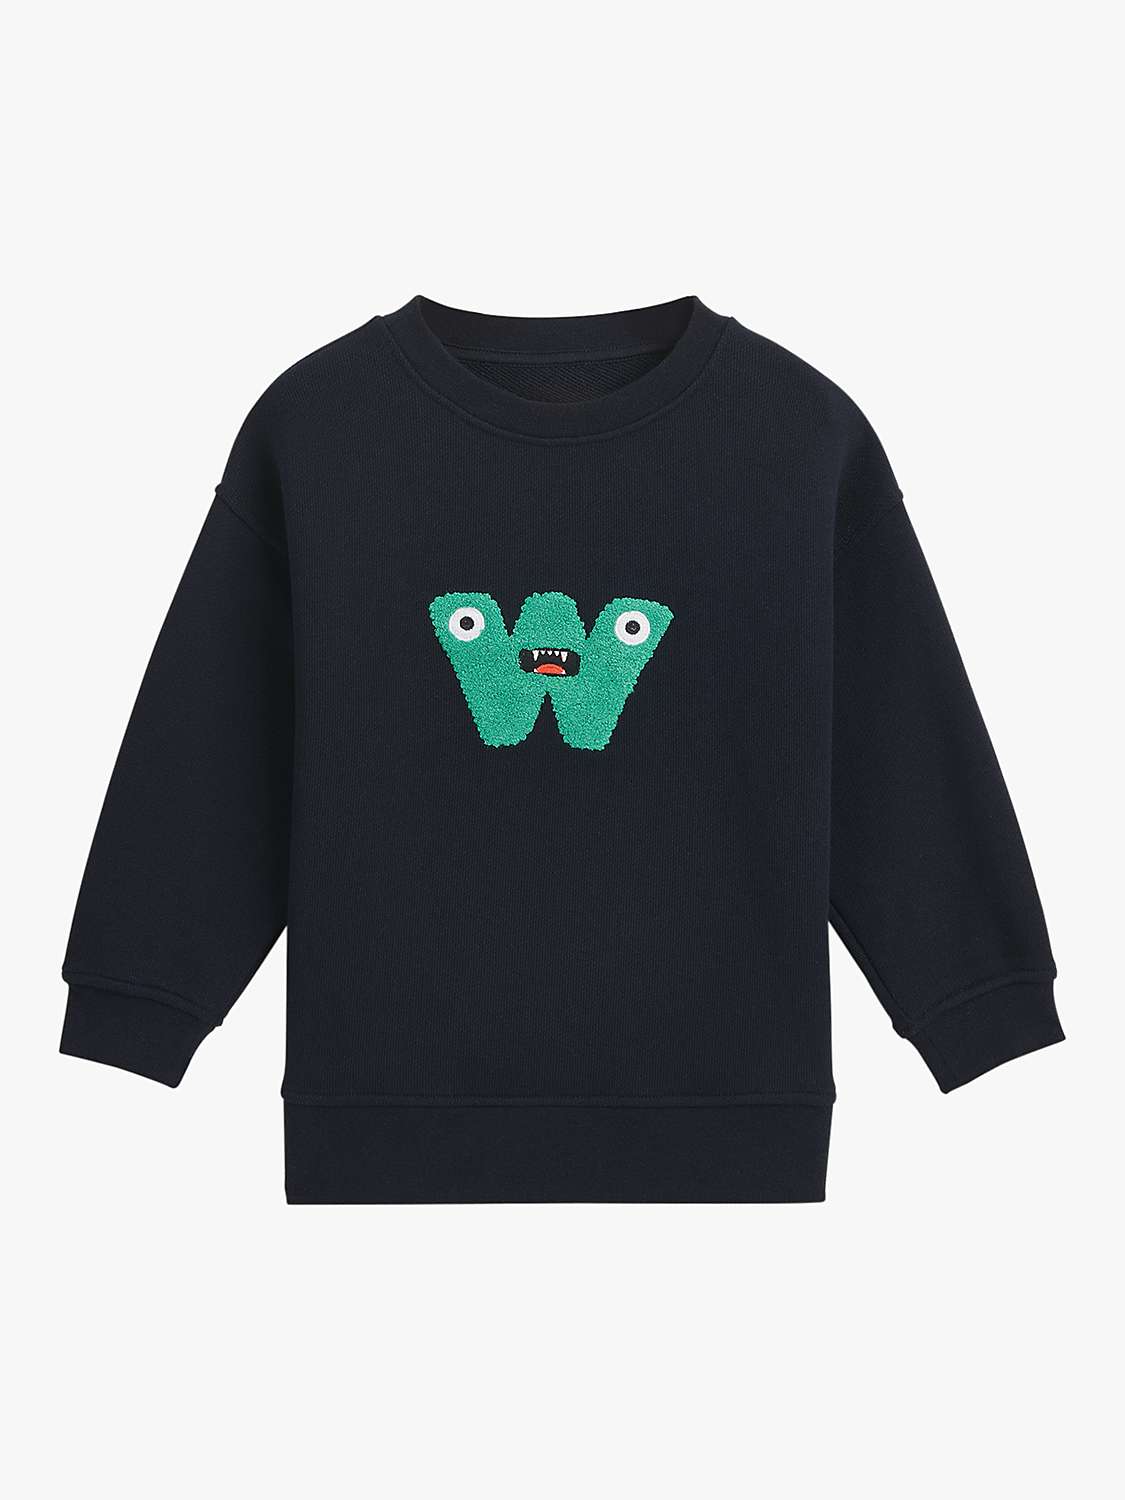 Buy Whistles Kids' Monster Embroidered Sweatshirt Online at johnlewis.com